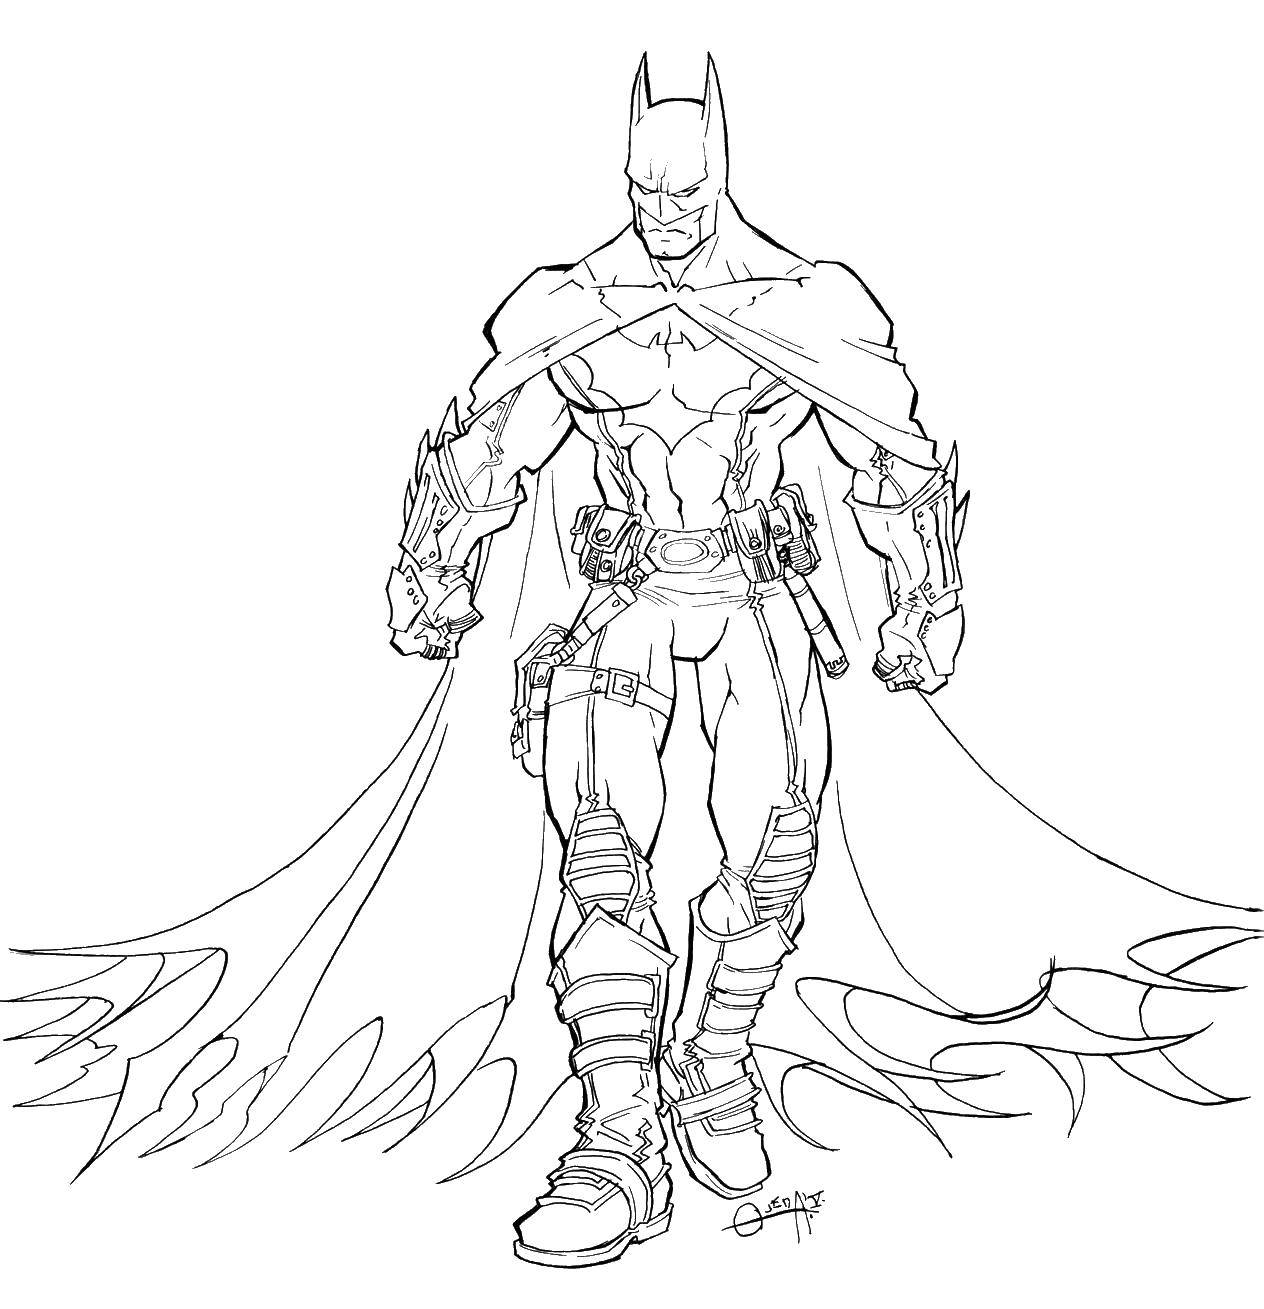 Название: Раскраска Бэтмен во все оружие. Категория: бэтмен. Теги: Бэтмен, супергерои.